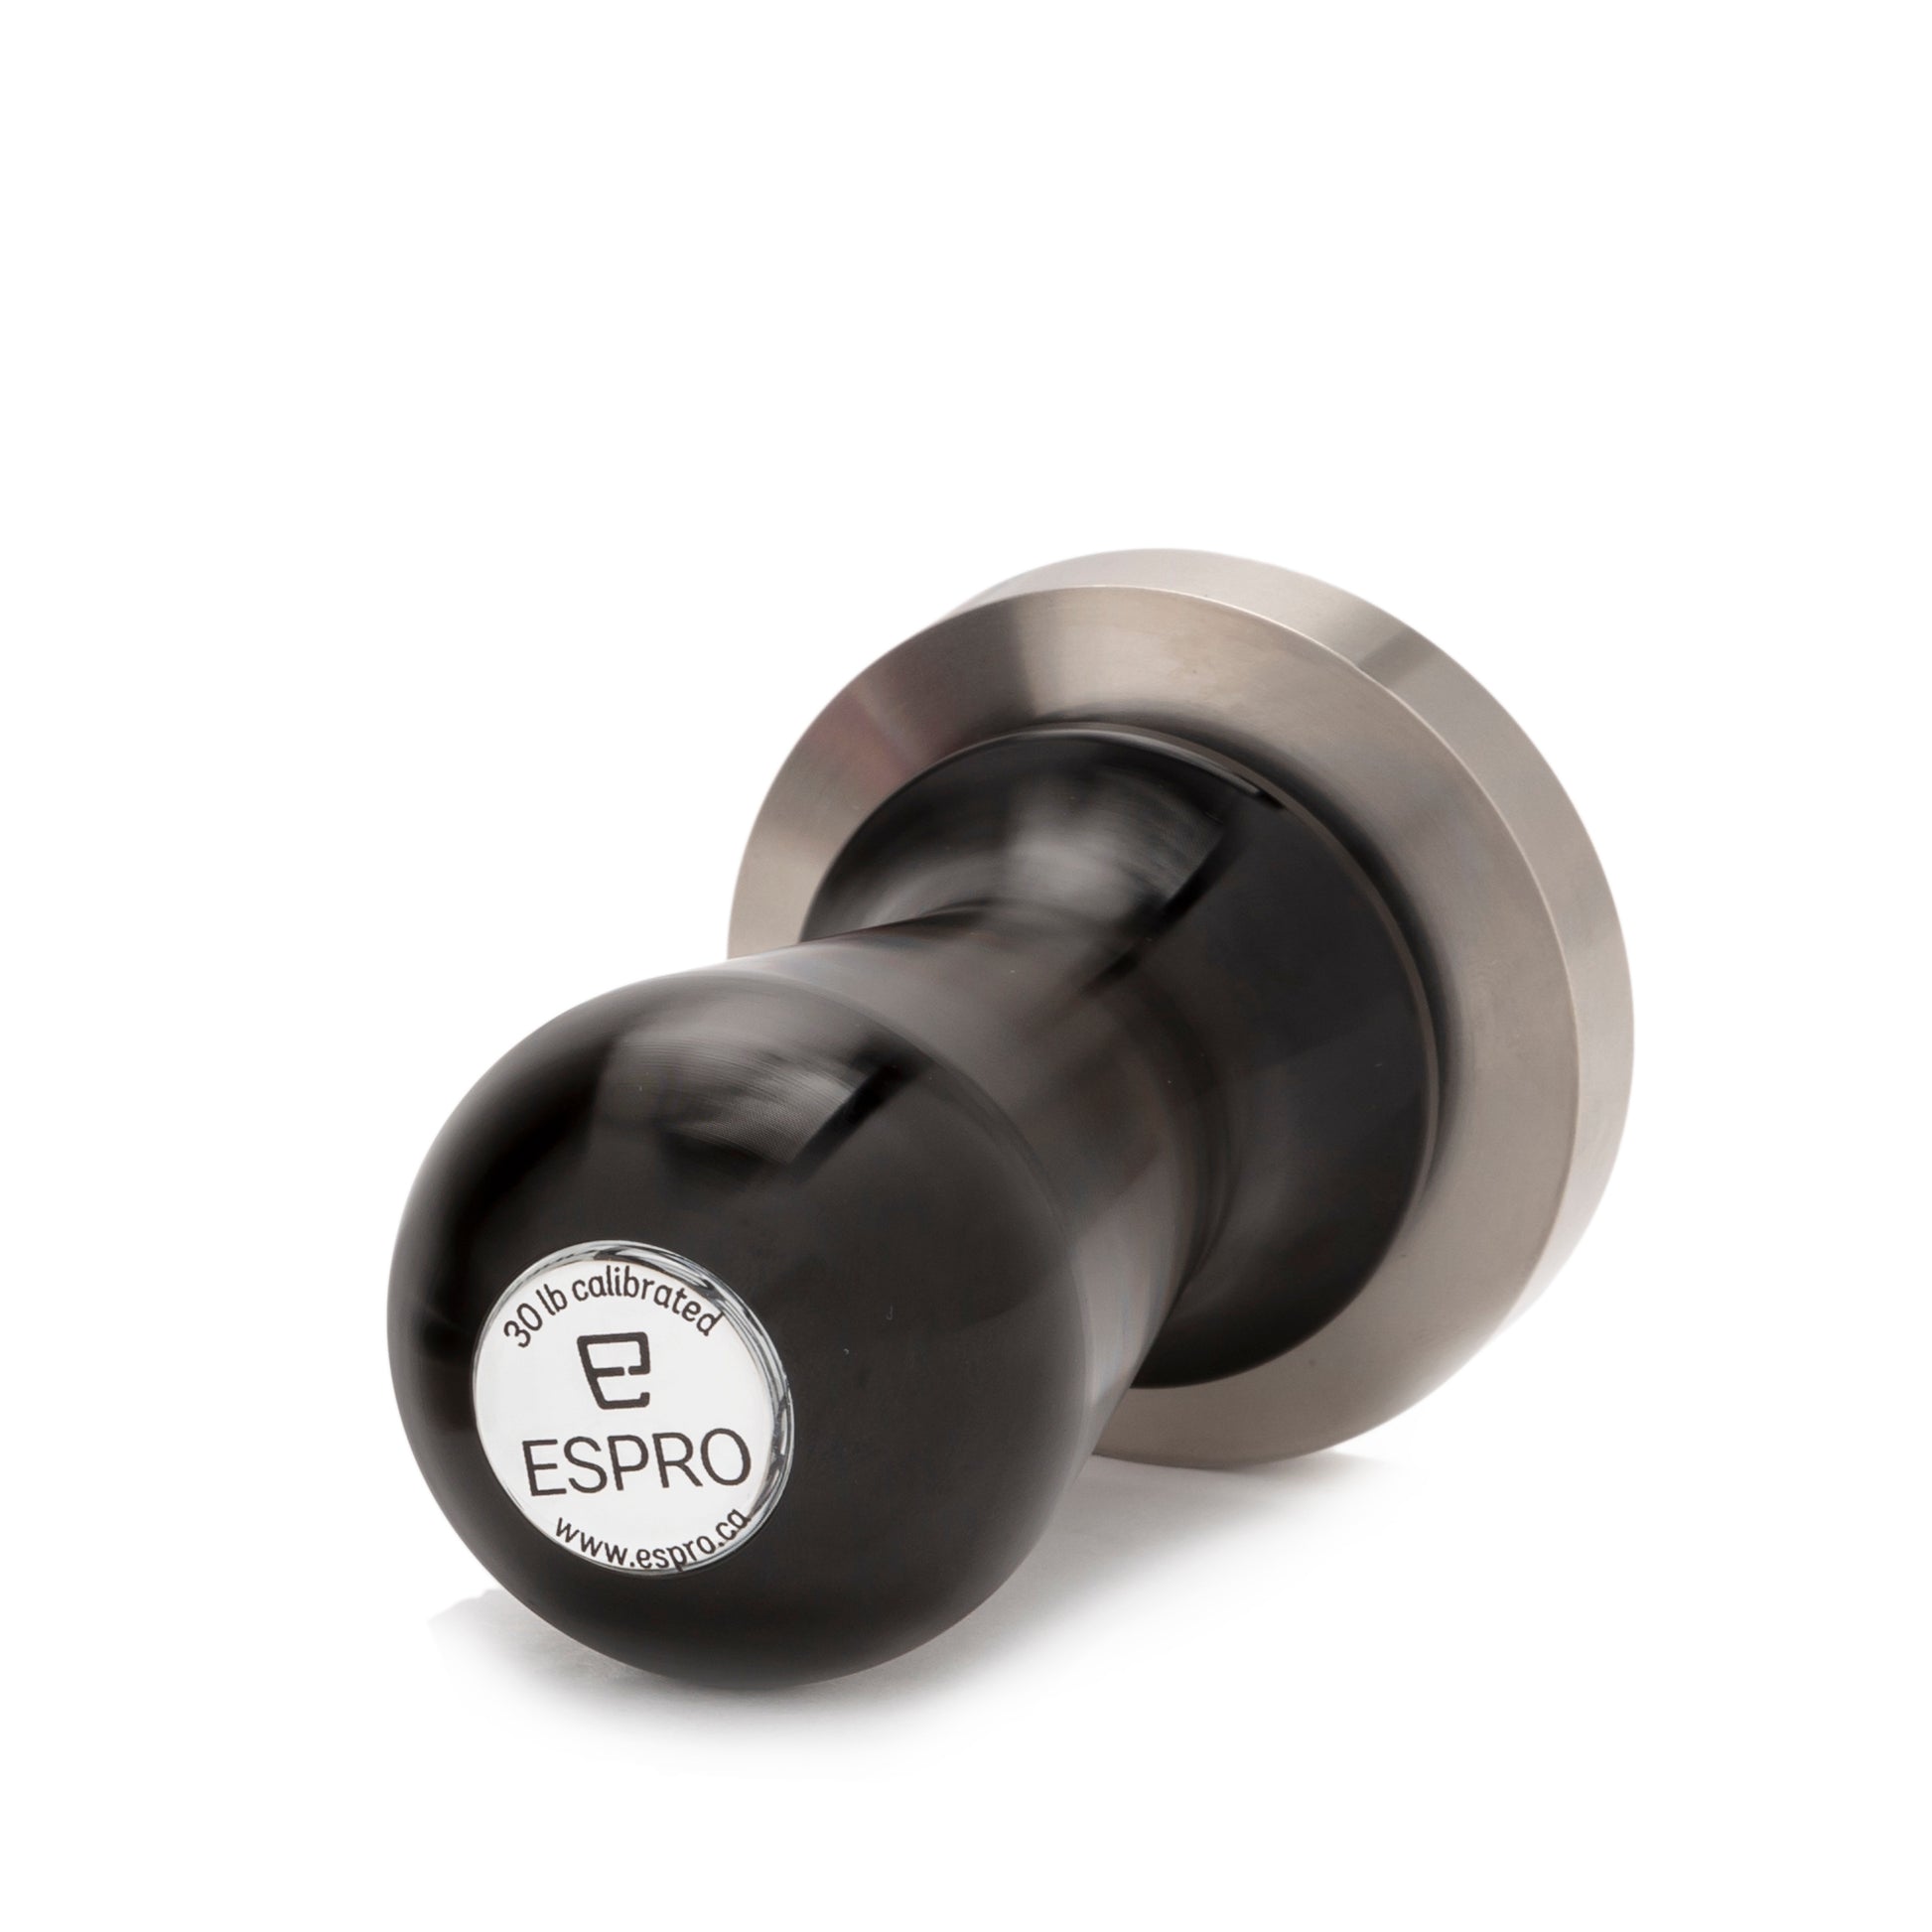 Espro 58mm Calibrated Convex Tamper – Whole Latte Love